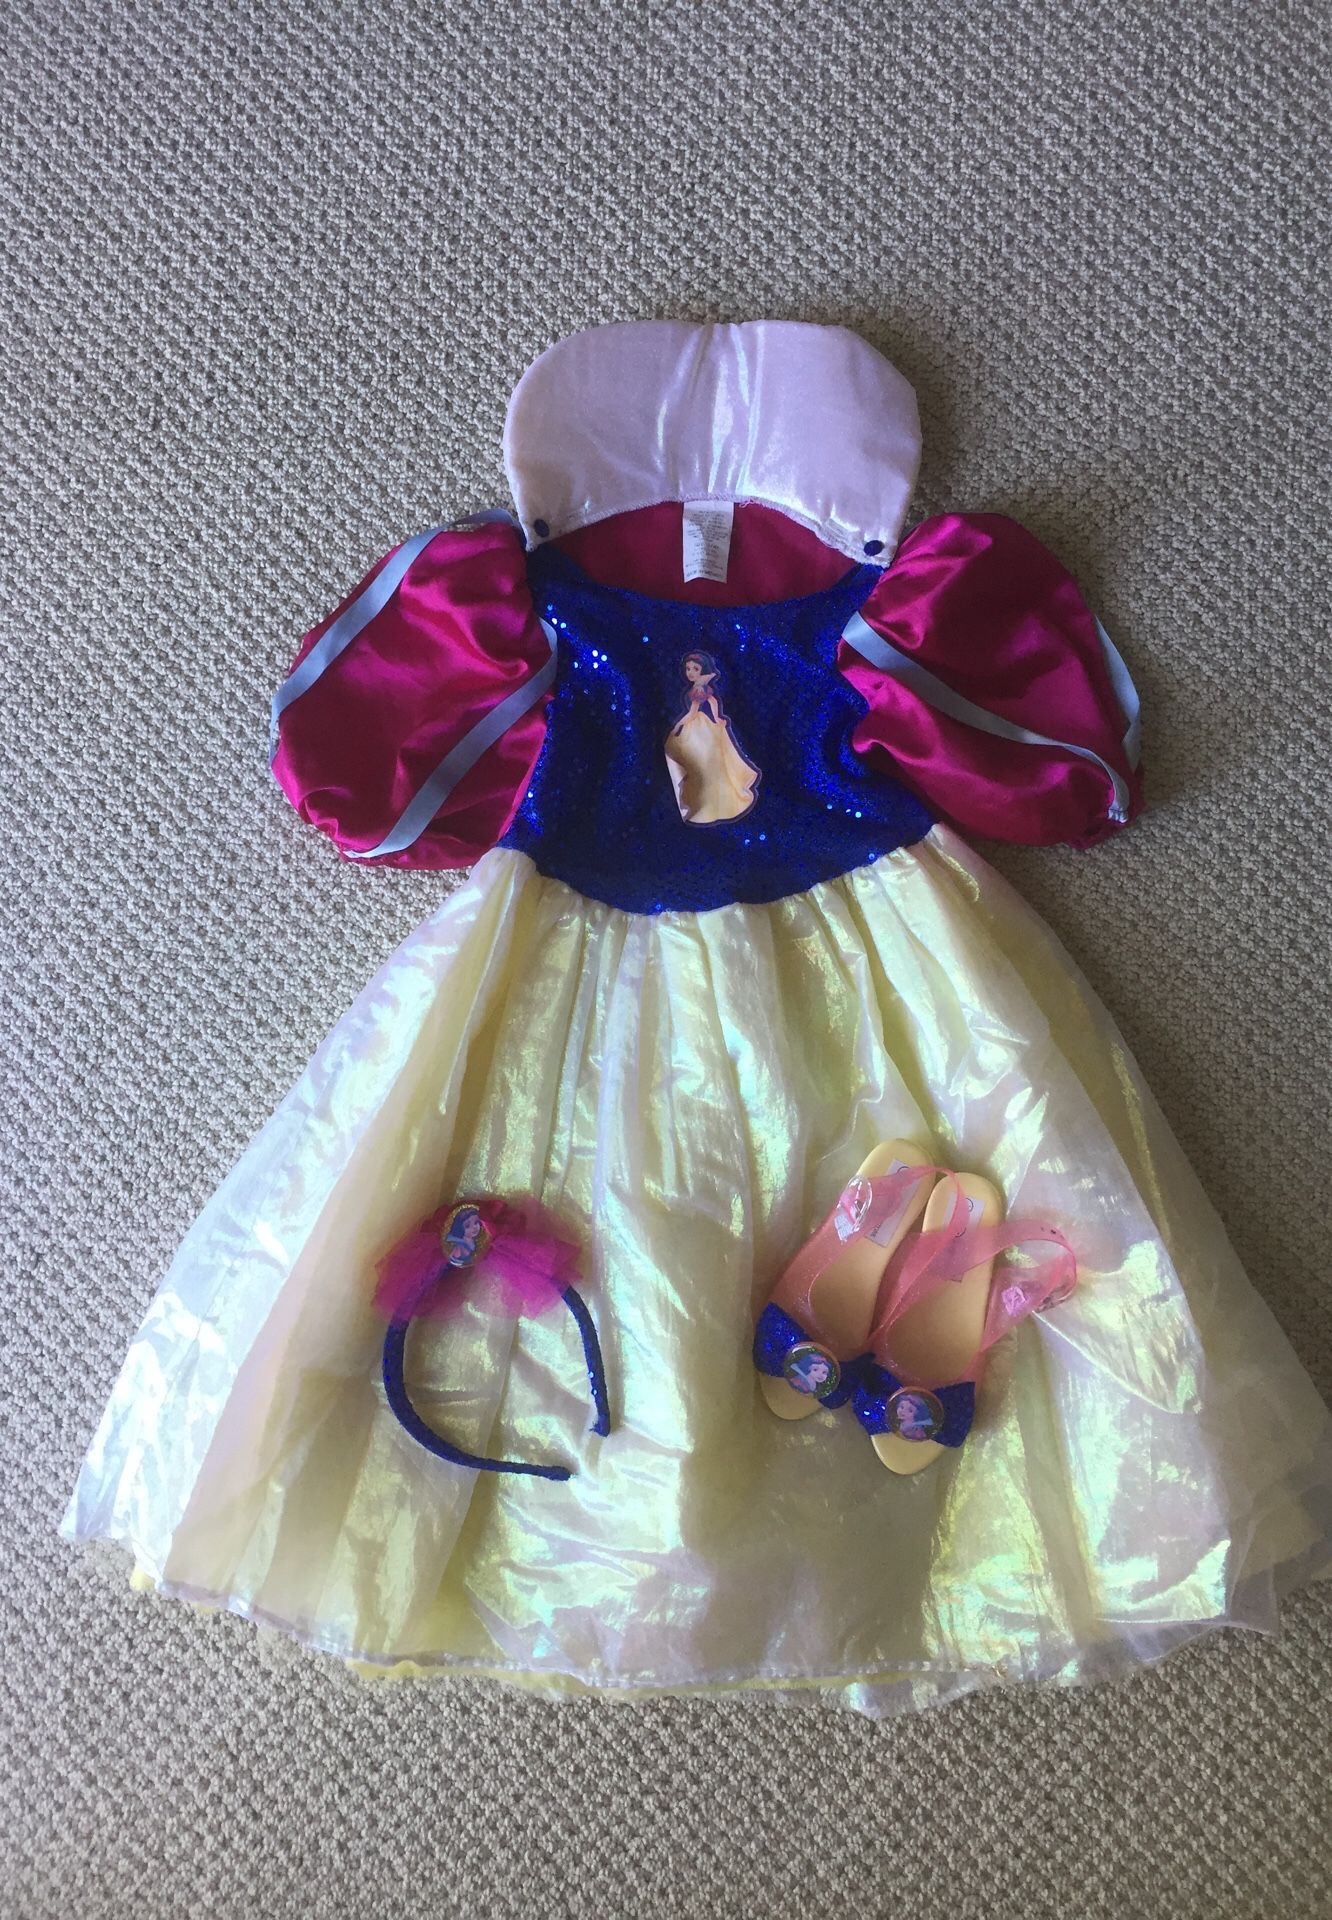 Disney’s Snow White toddler costume